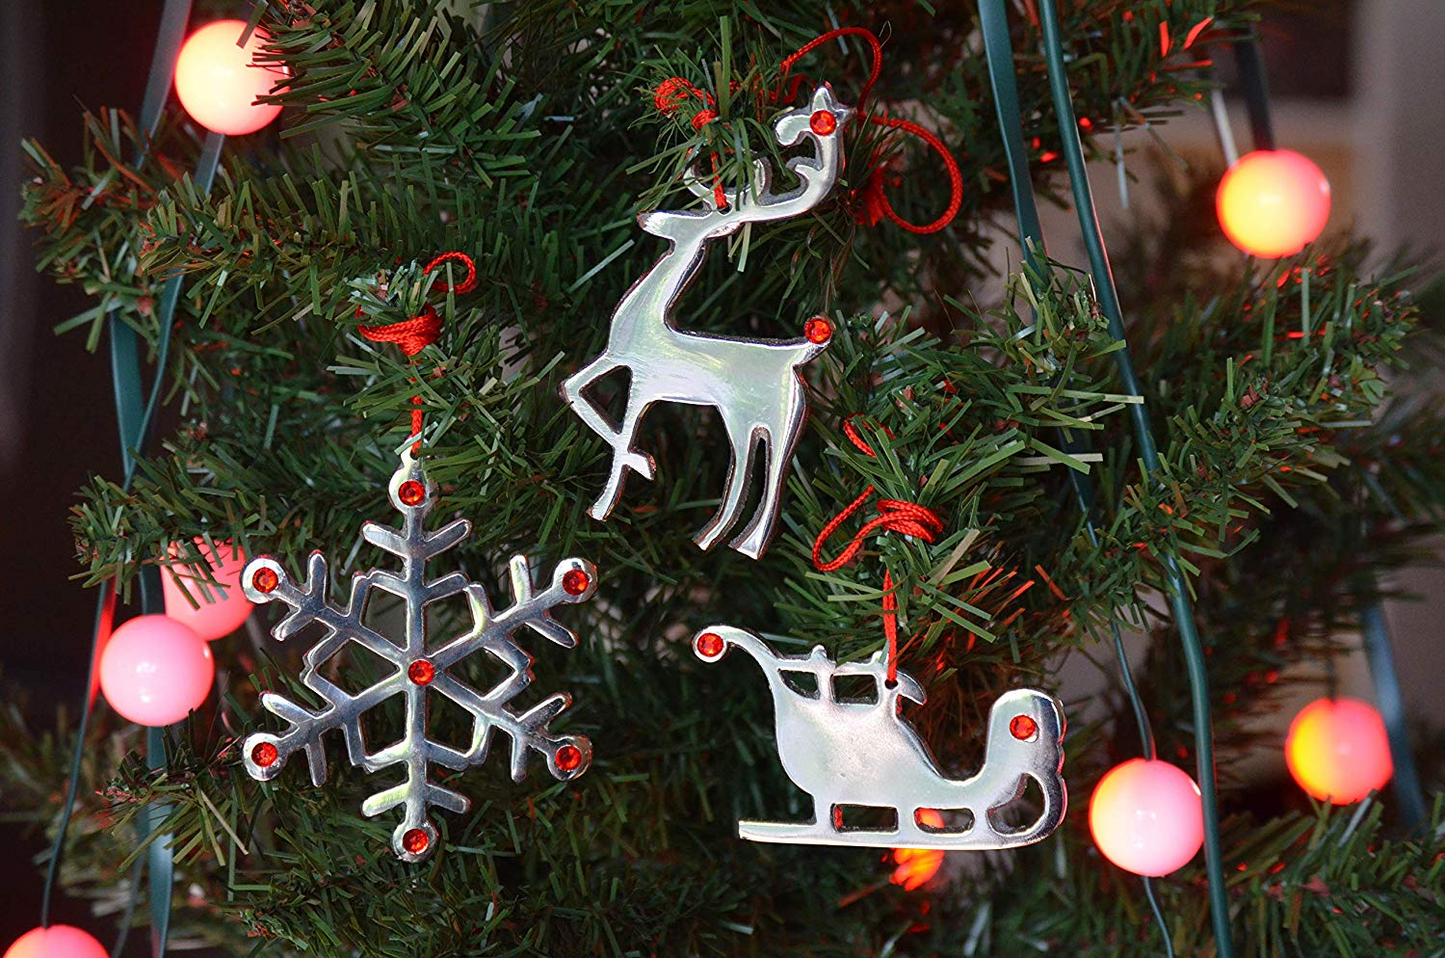 Sleigh Christmas Tree Ornament Decorations Set of 8